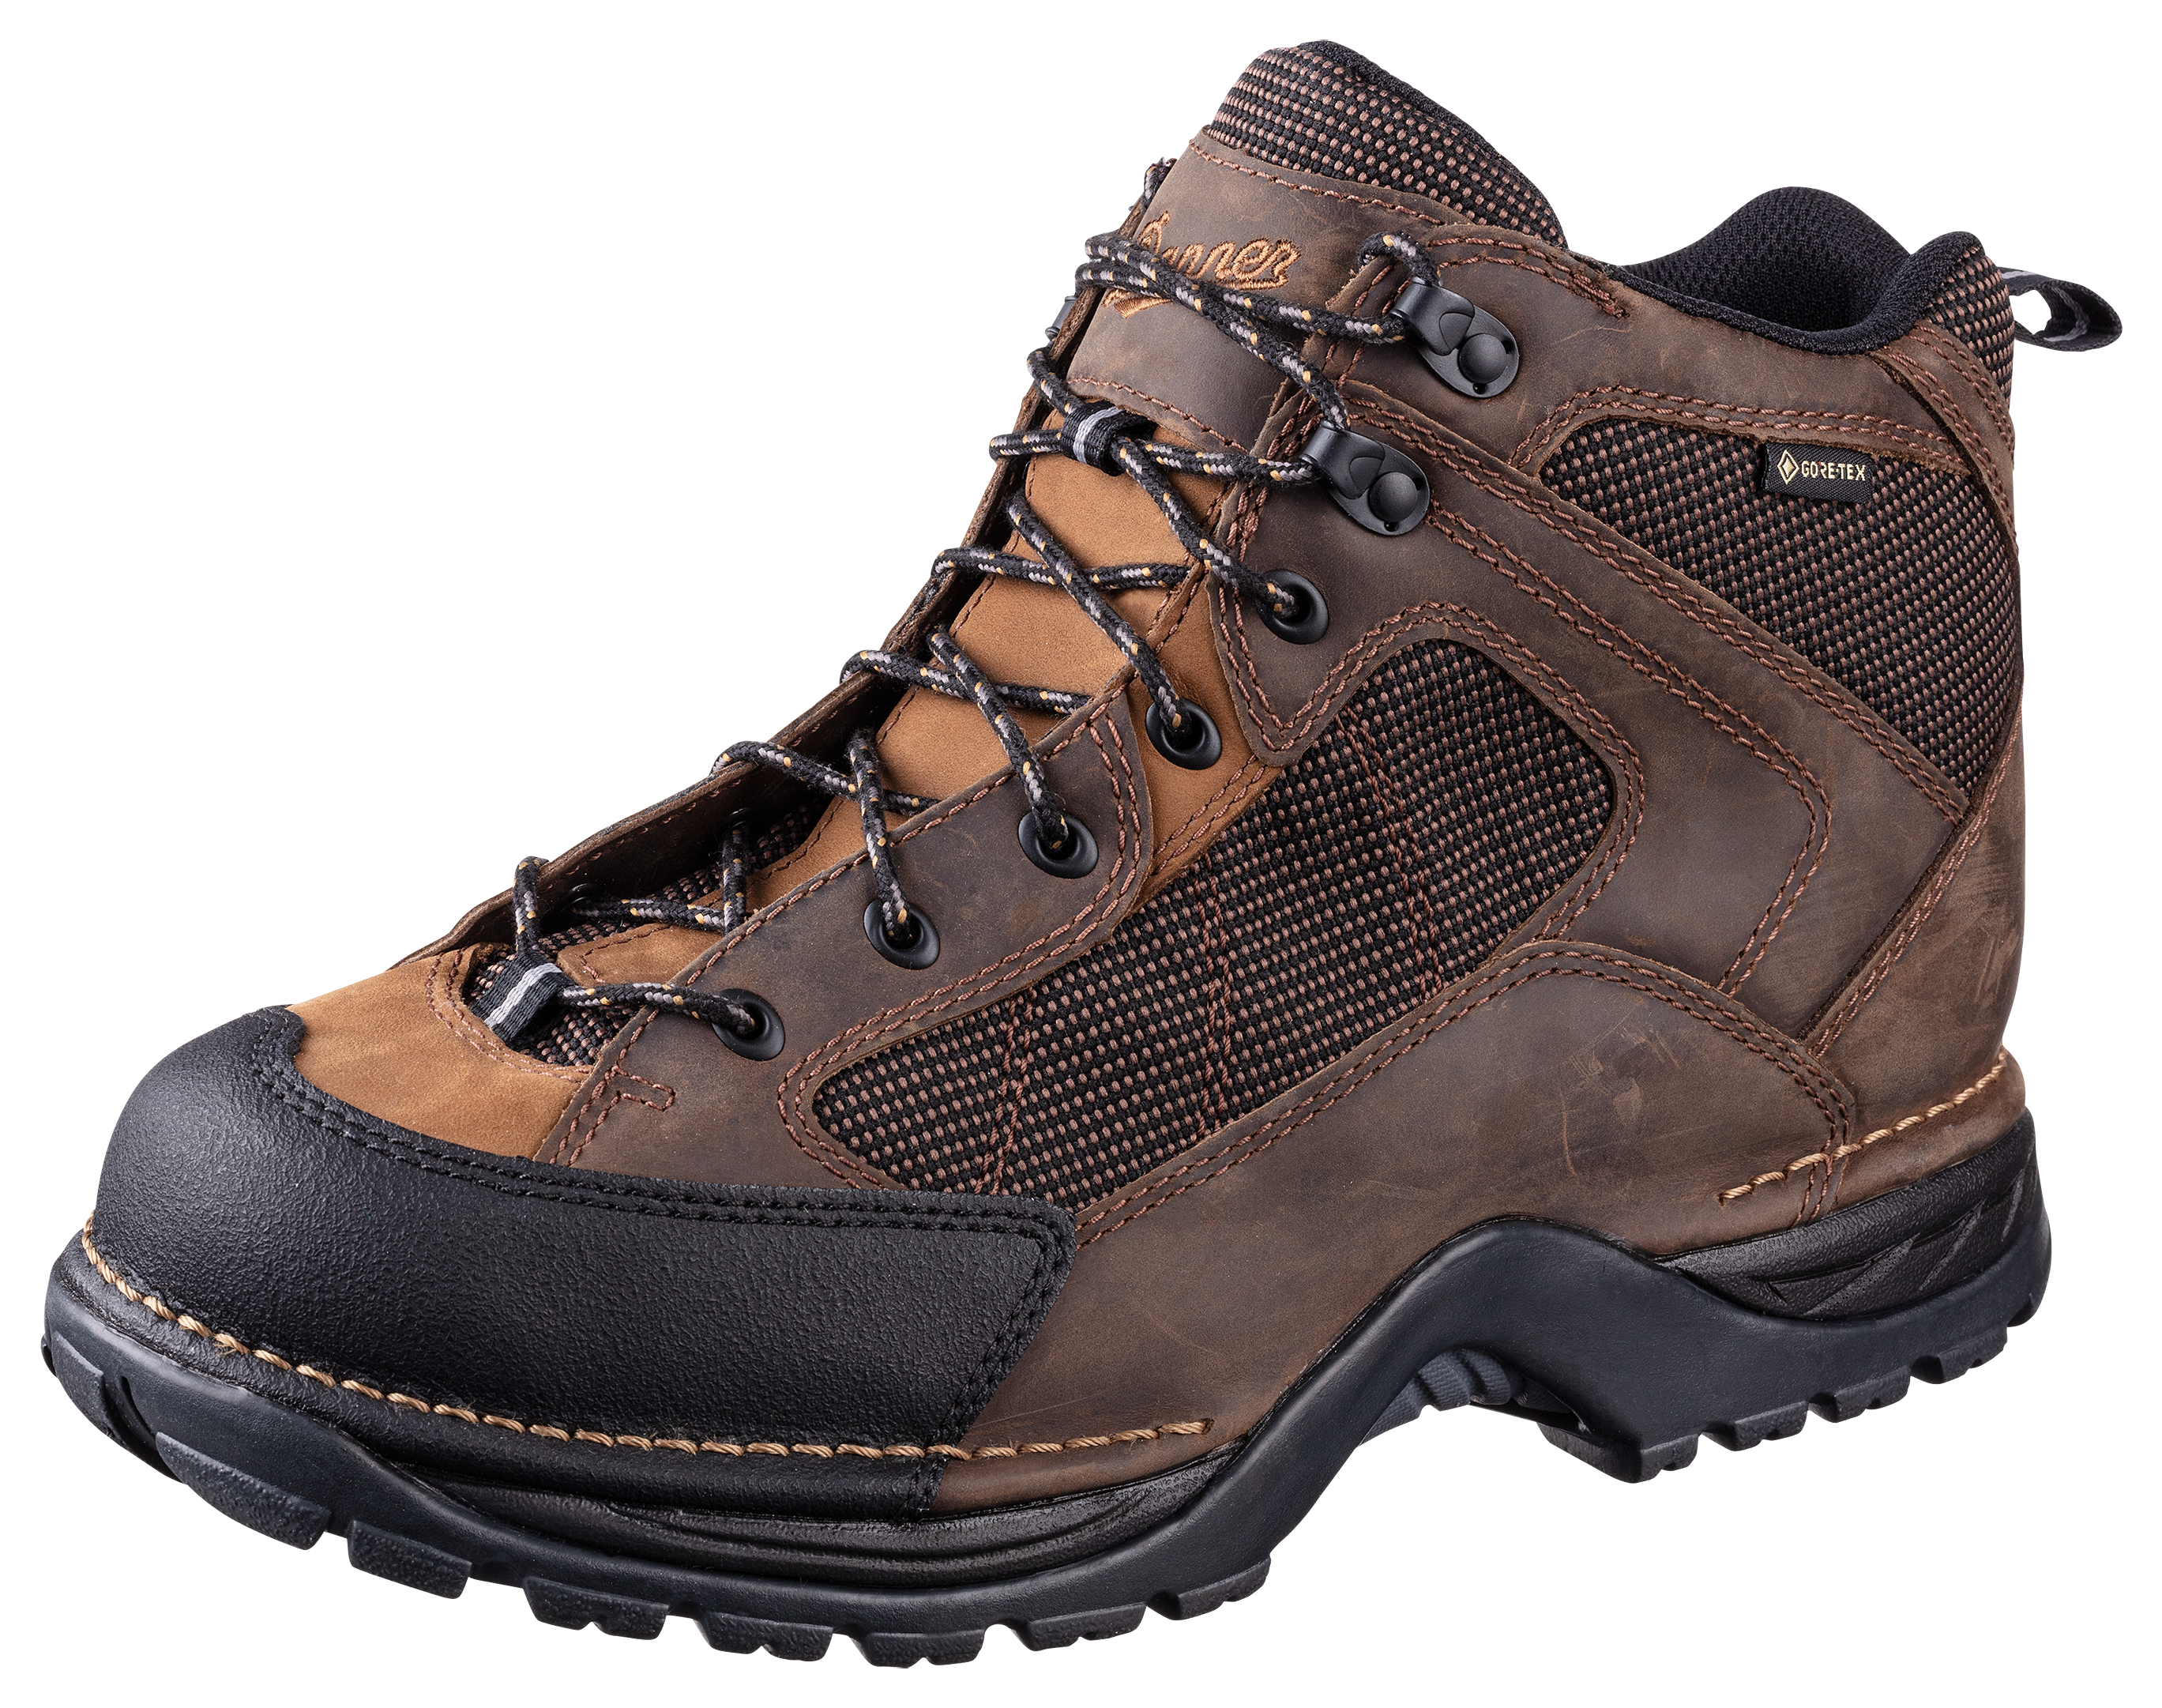 Danner Radical 452 GORE-TEX Hiking Boots for Men - Dark Brown - 13W